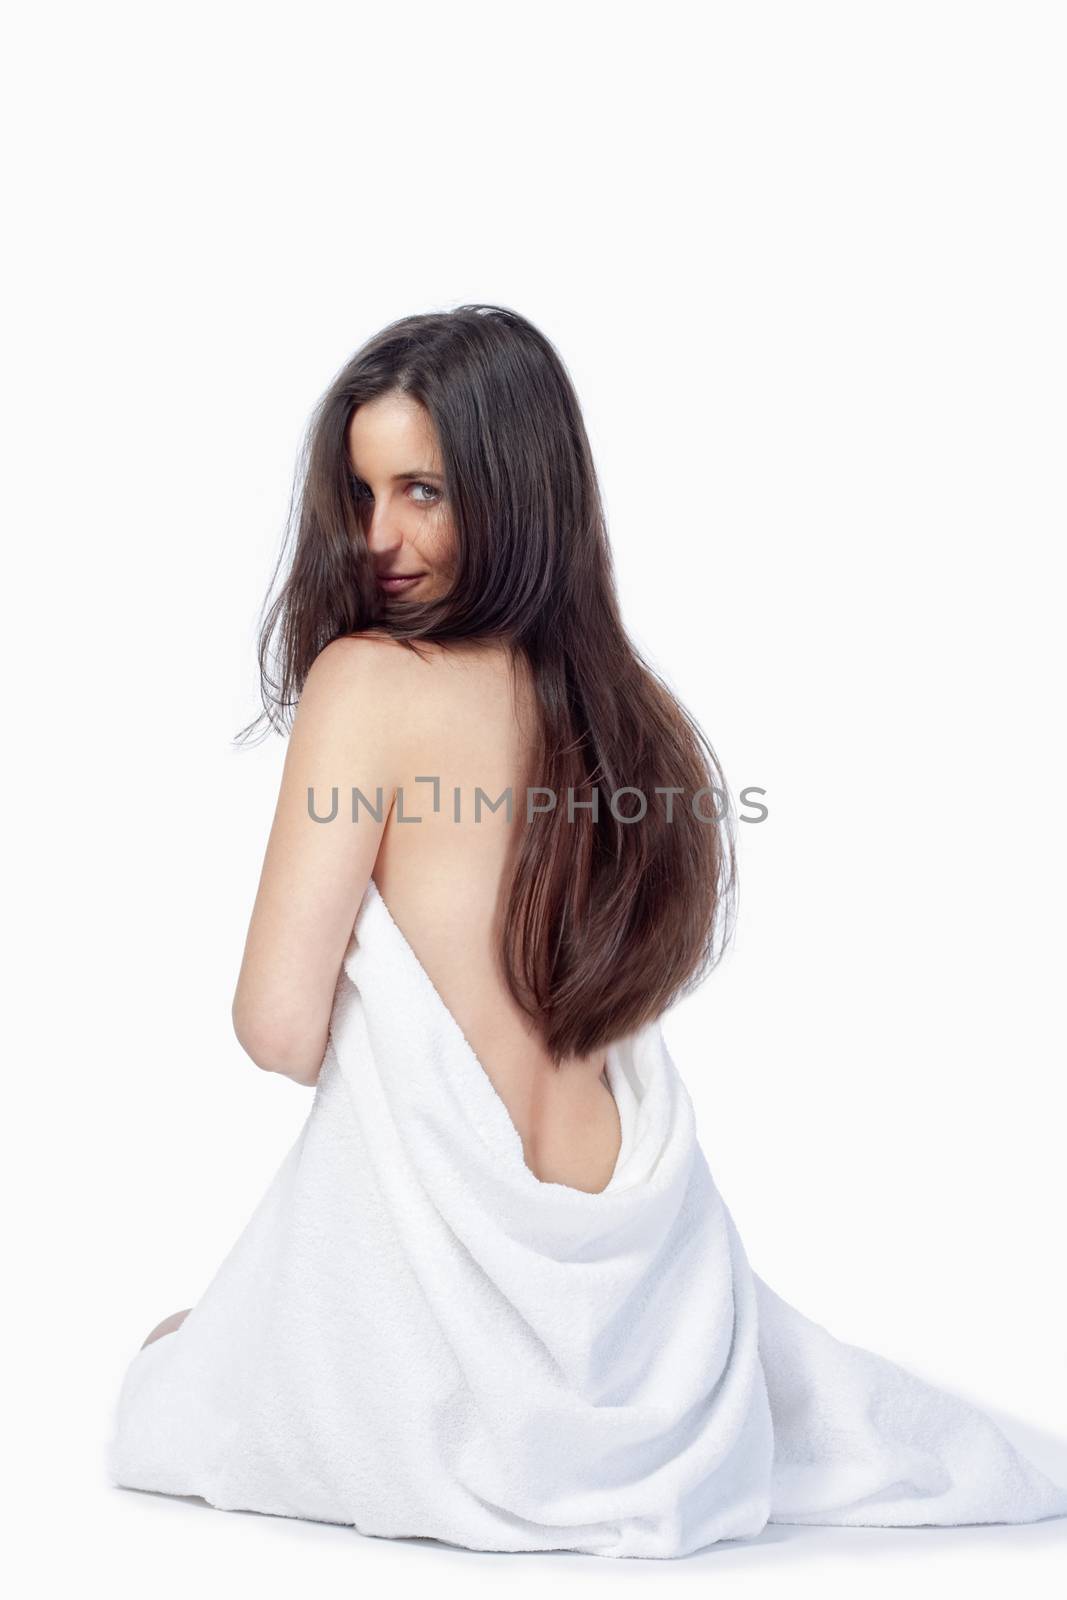 woman in white towel by courtyardpix